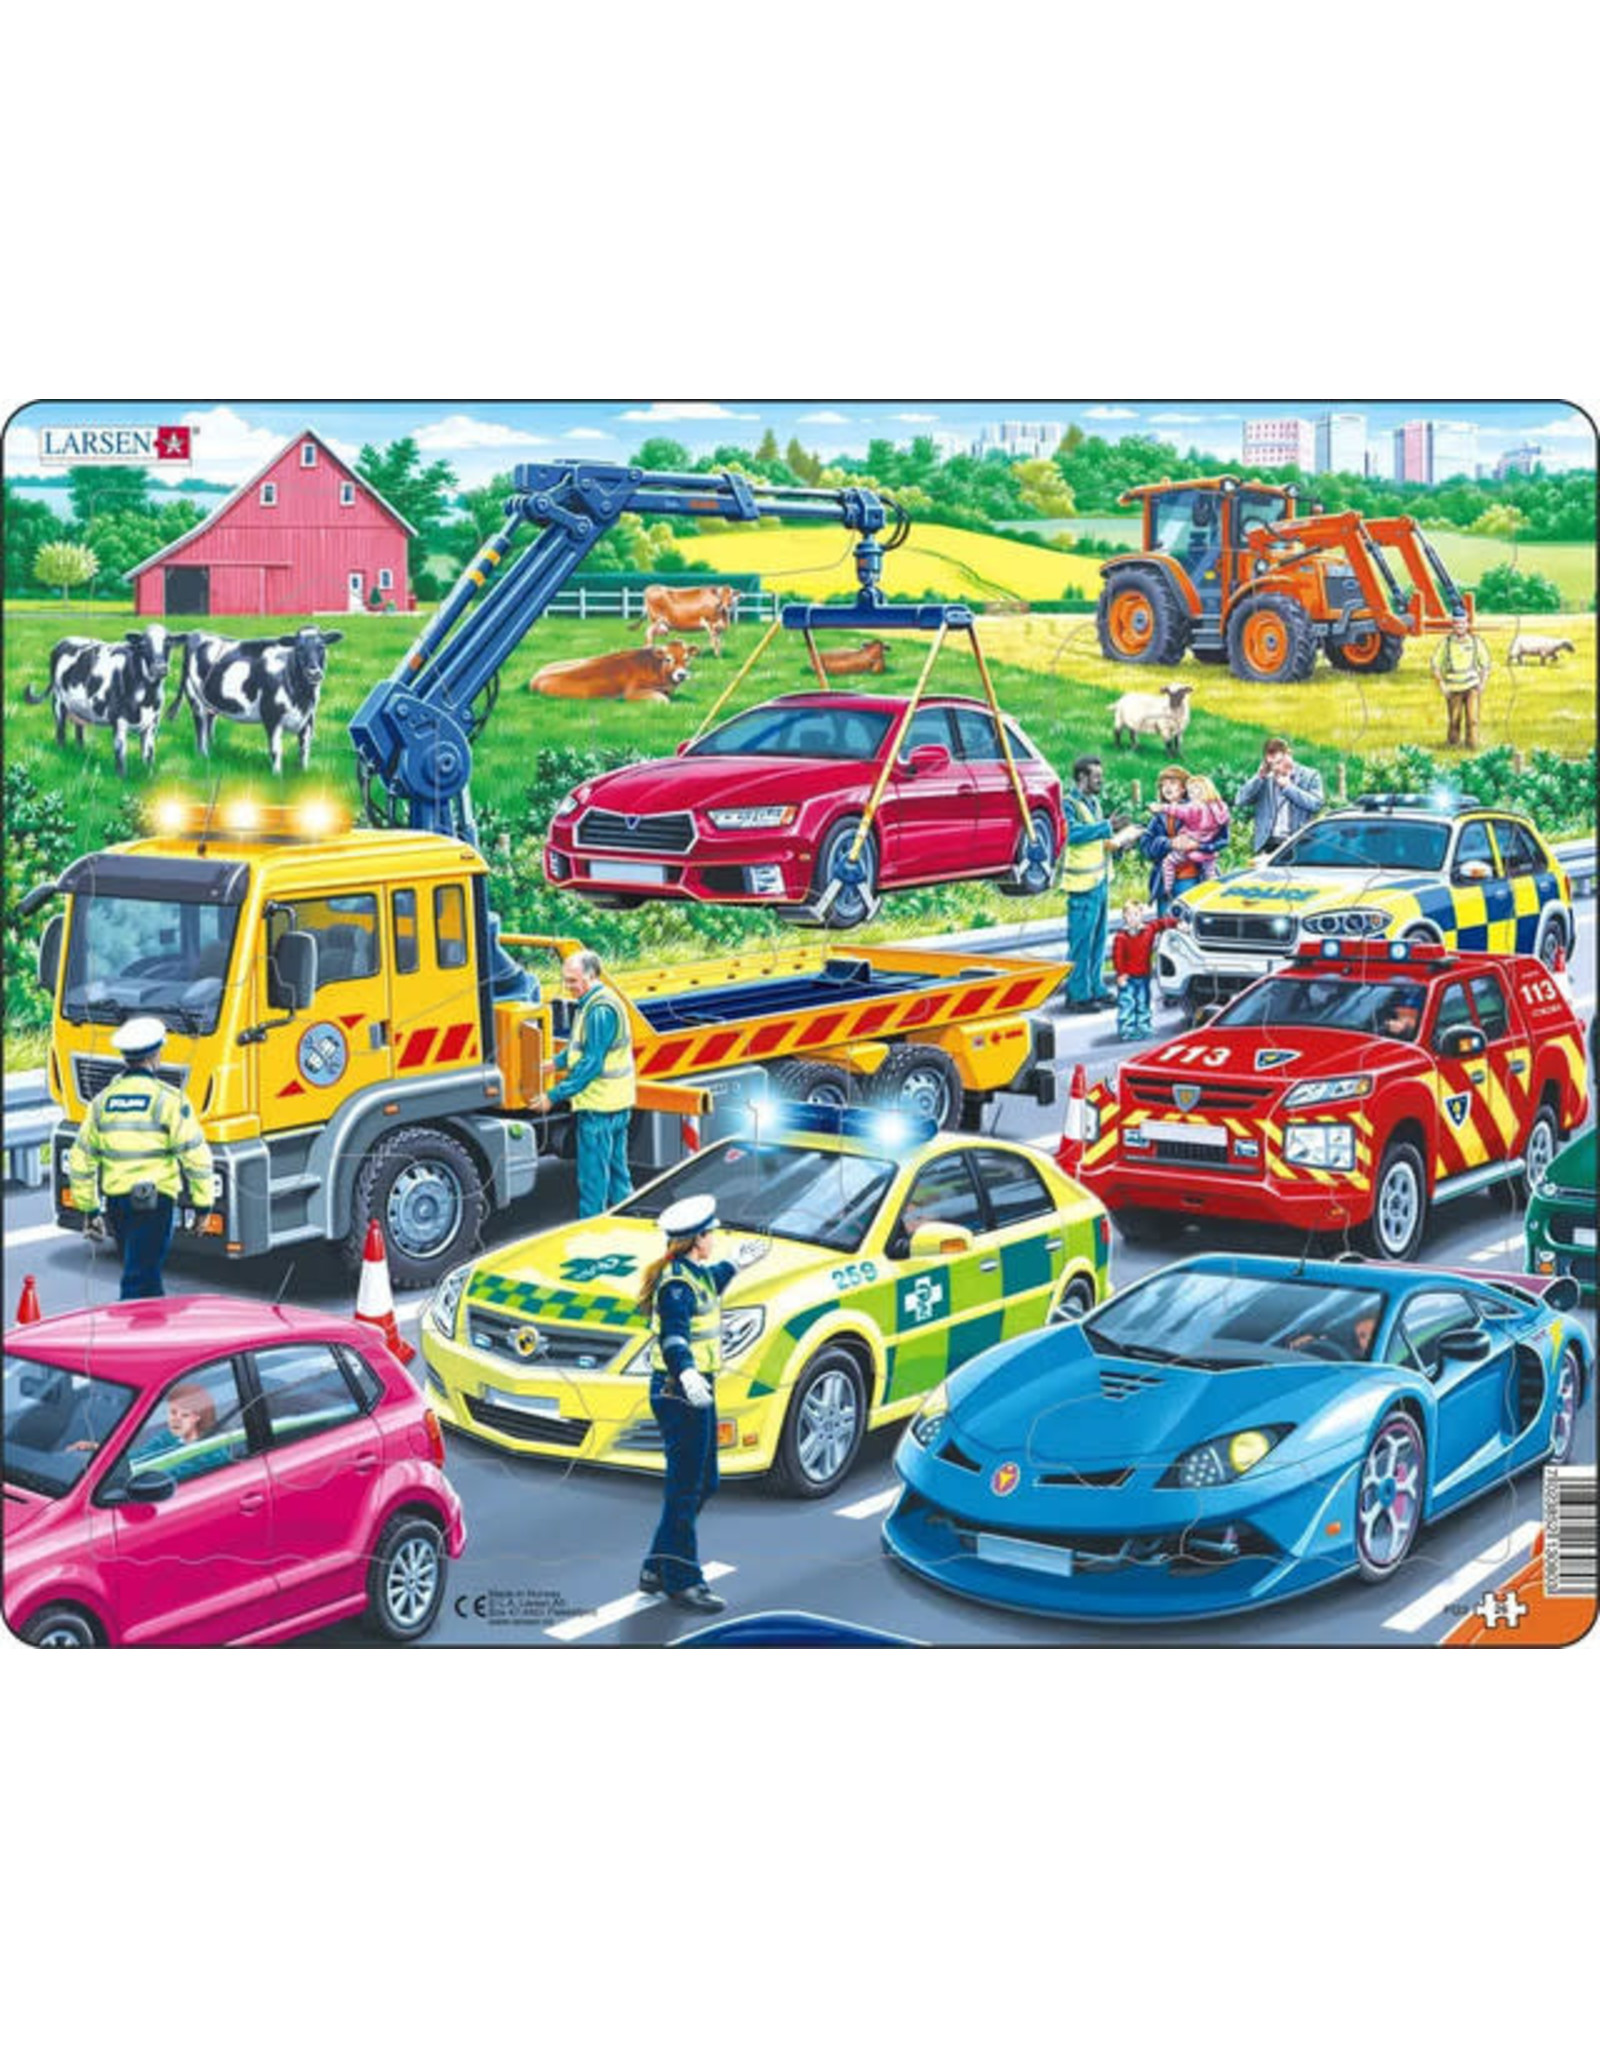 Rescue Vehicles 26 piece  Jigsaw Puzzle